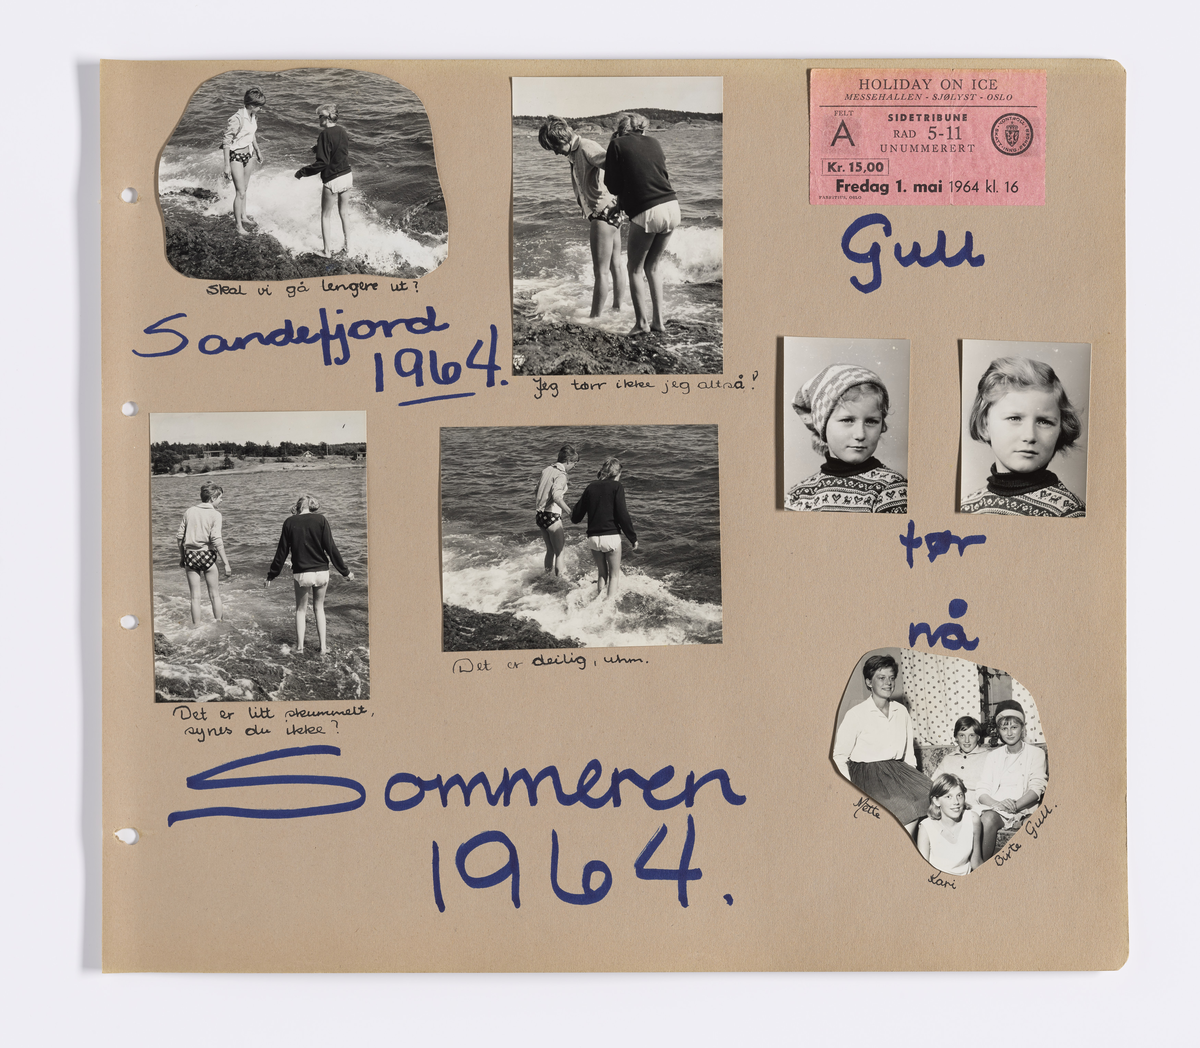 Side i Mette Digerud Brænsdhøi sitt barnealbum (7 til 16 år)